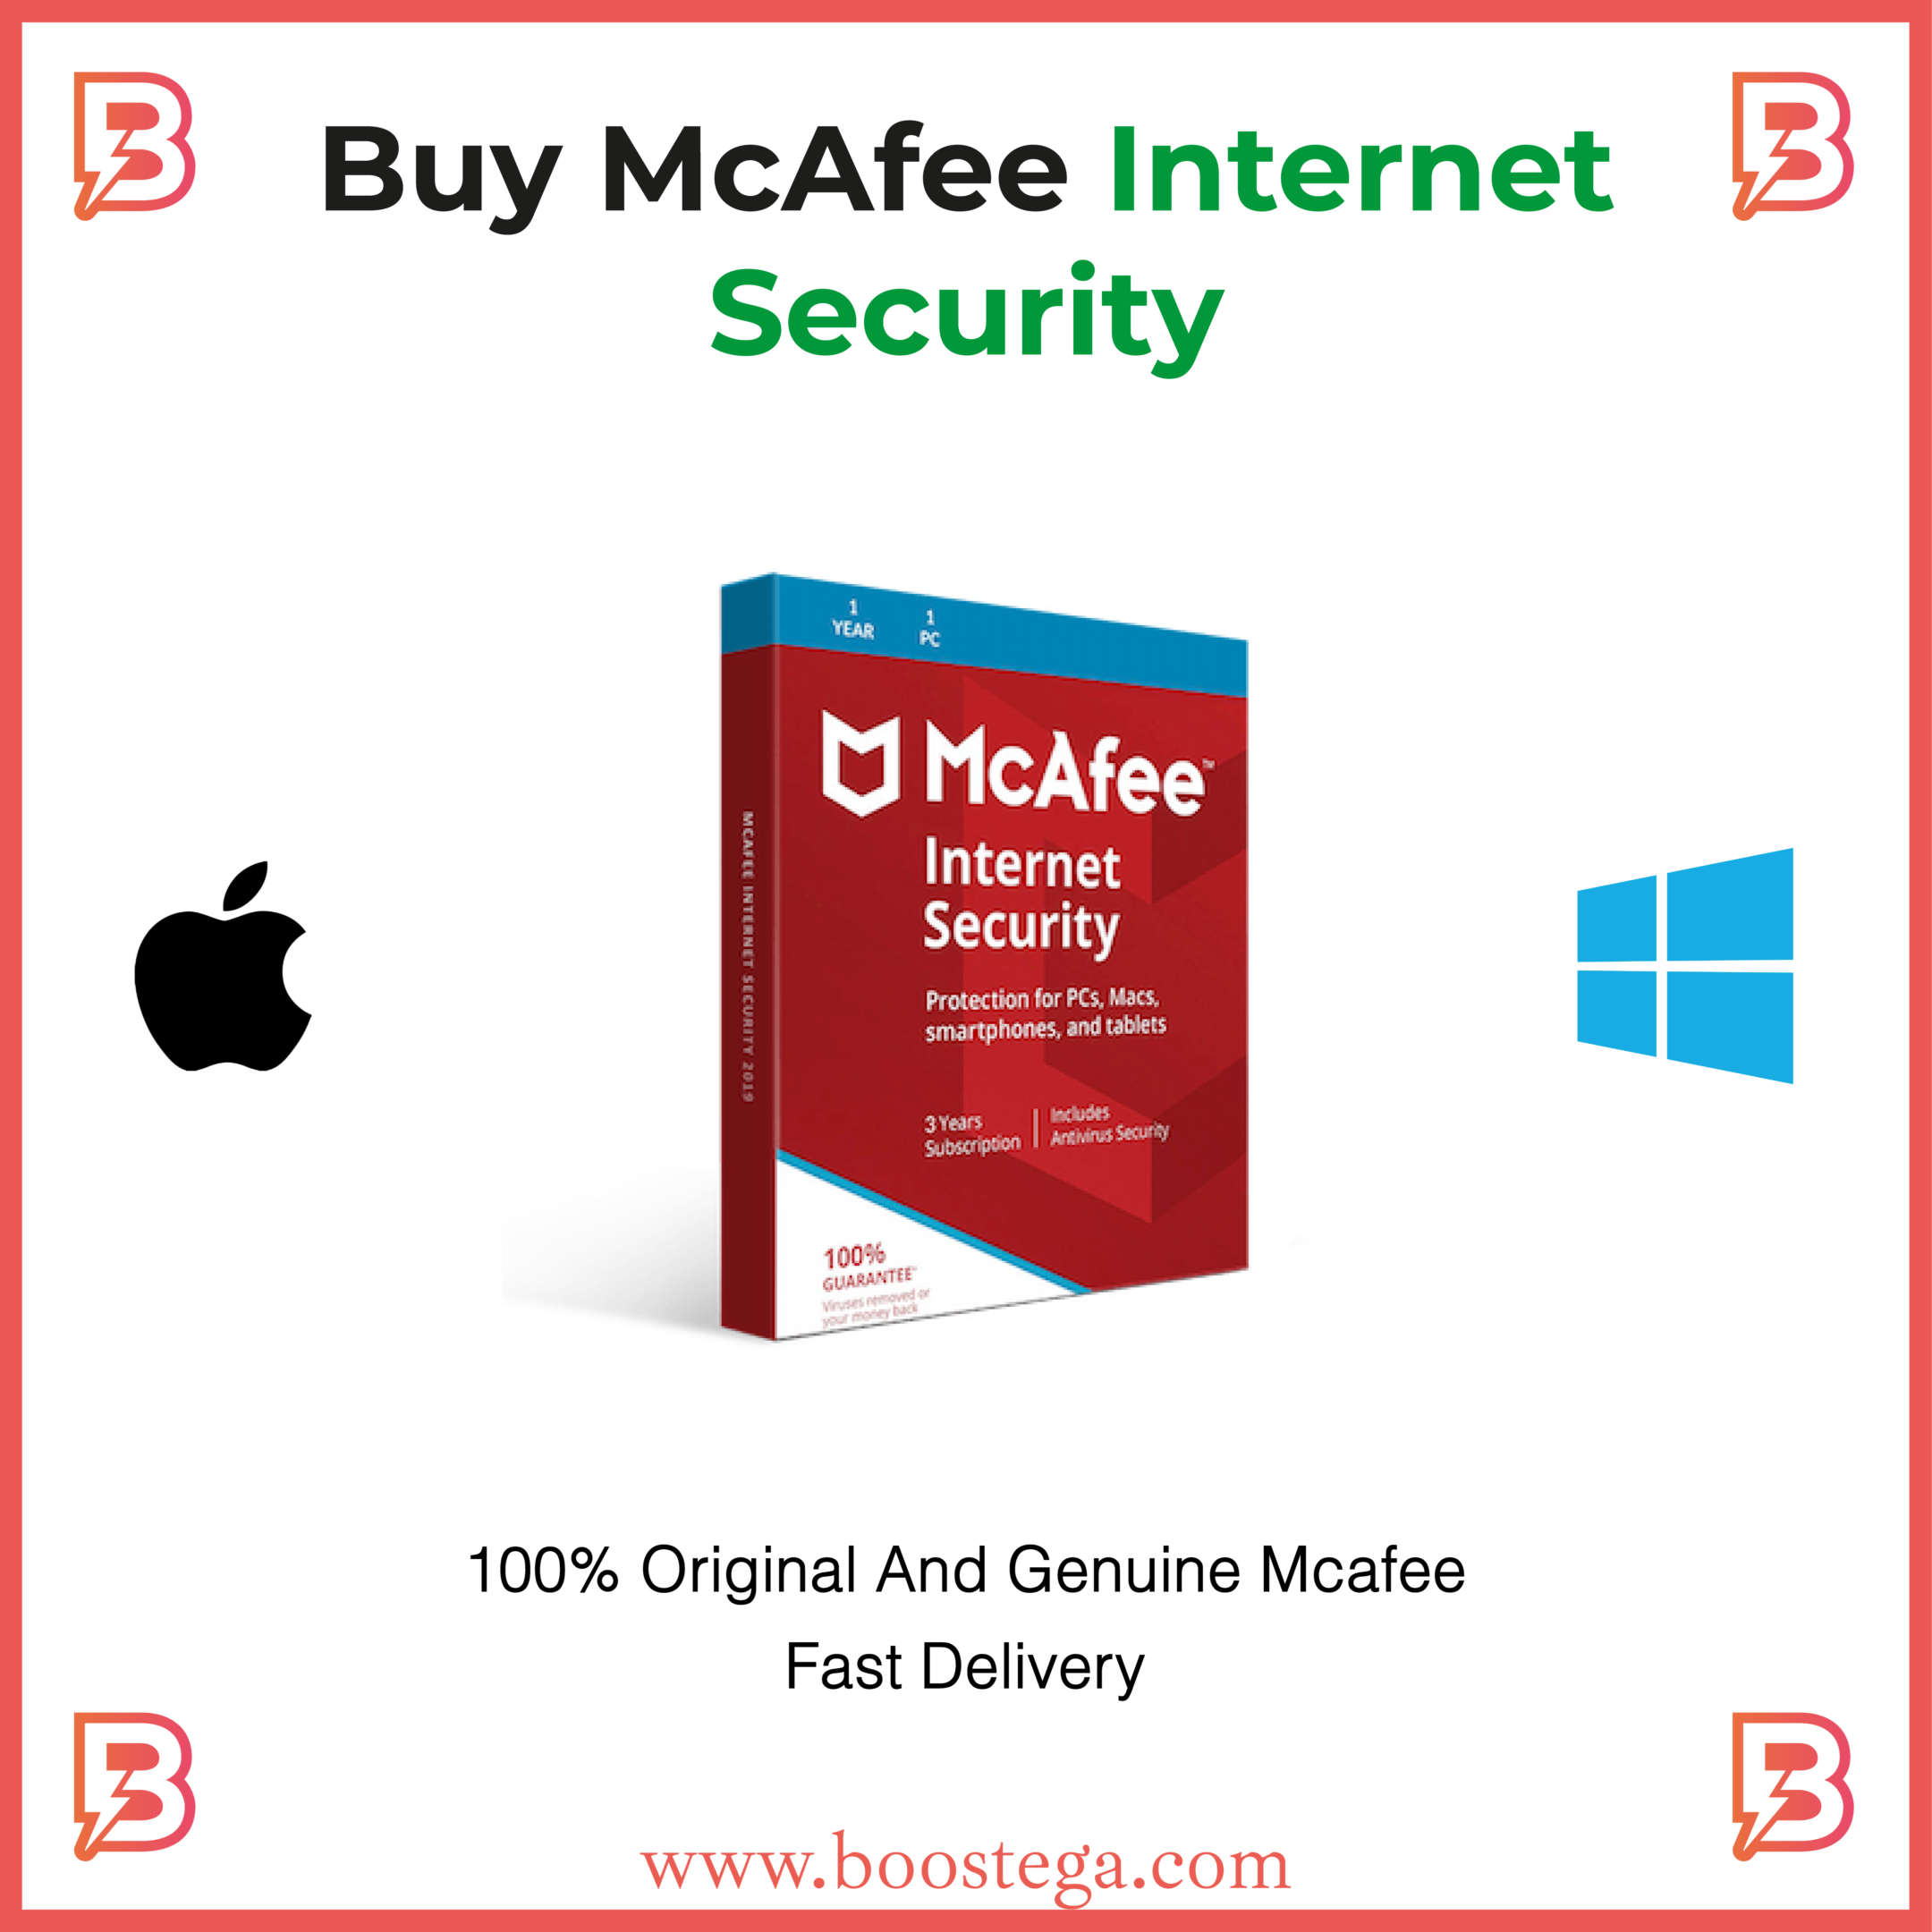 Buy McAfee Internet security by boostega